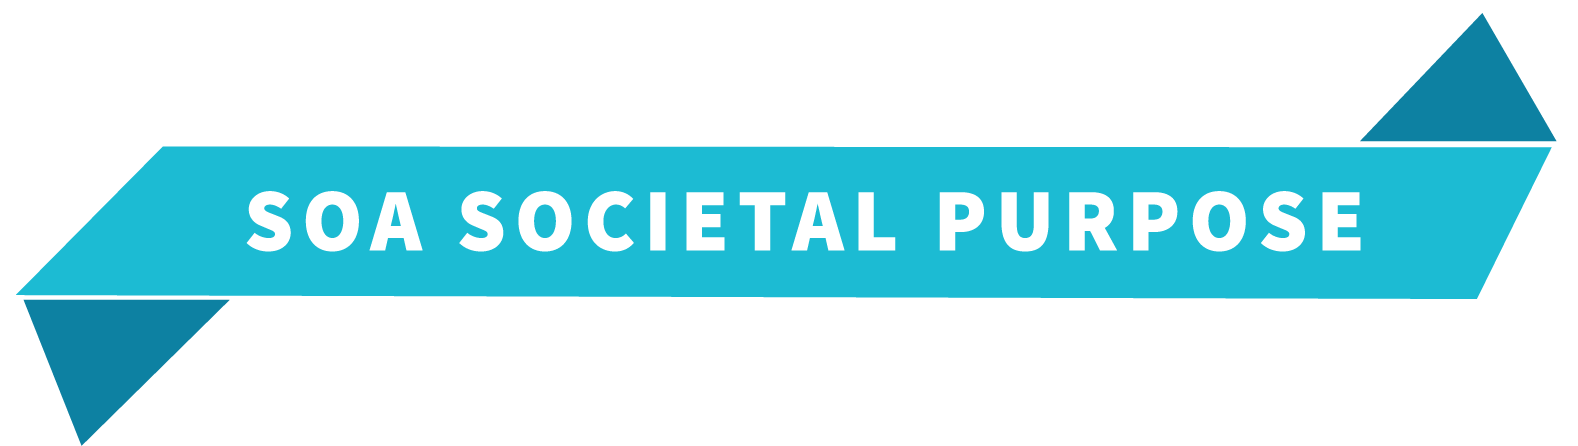 societal-purpose-ribbon.png